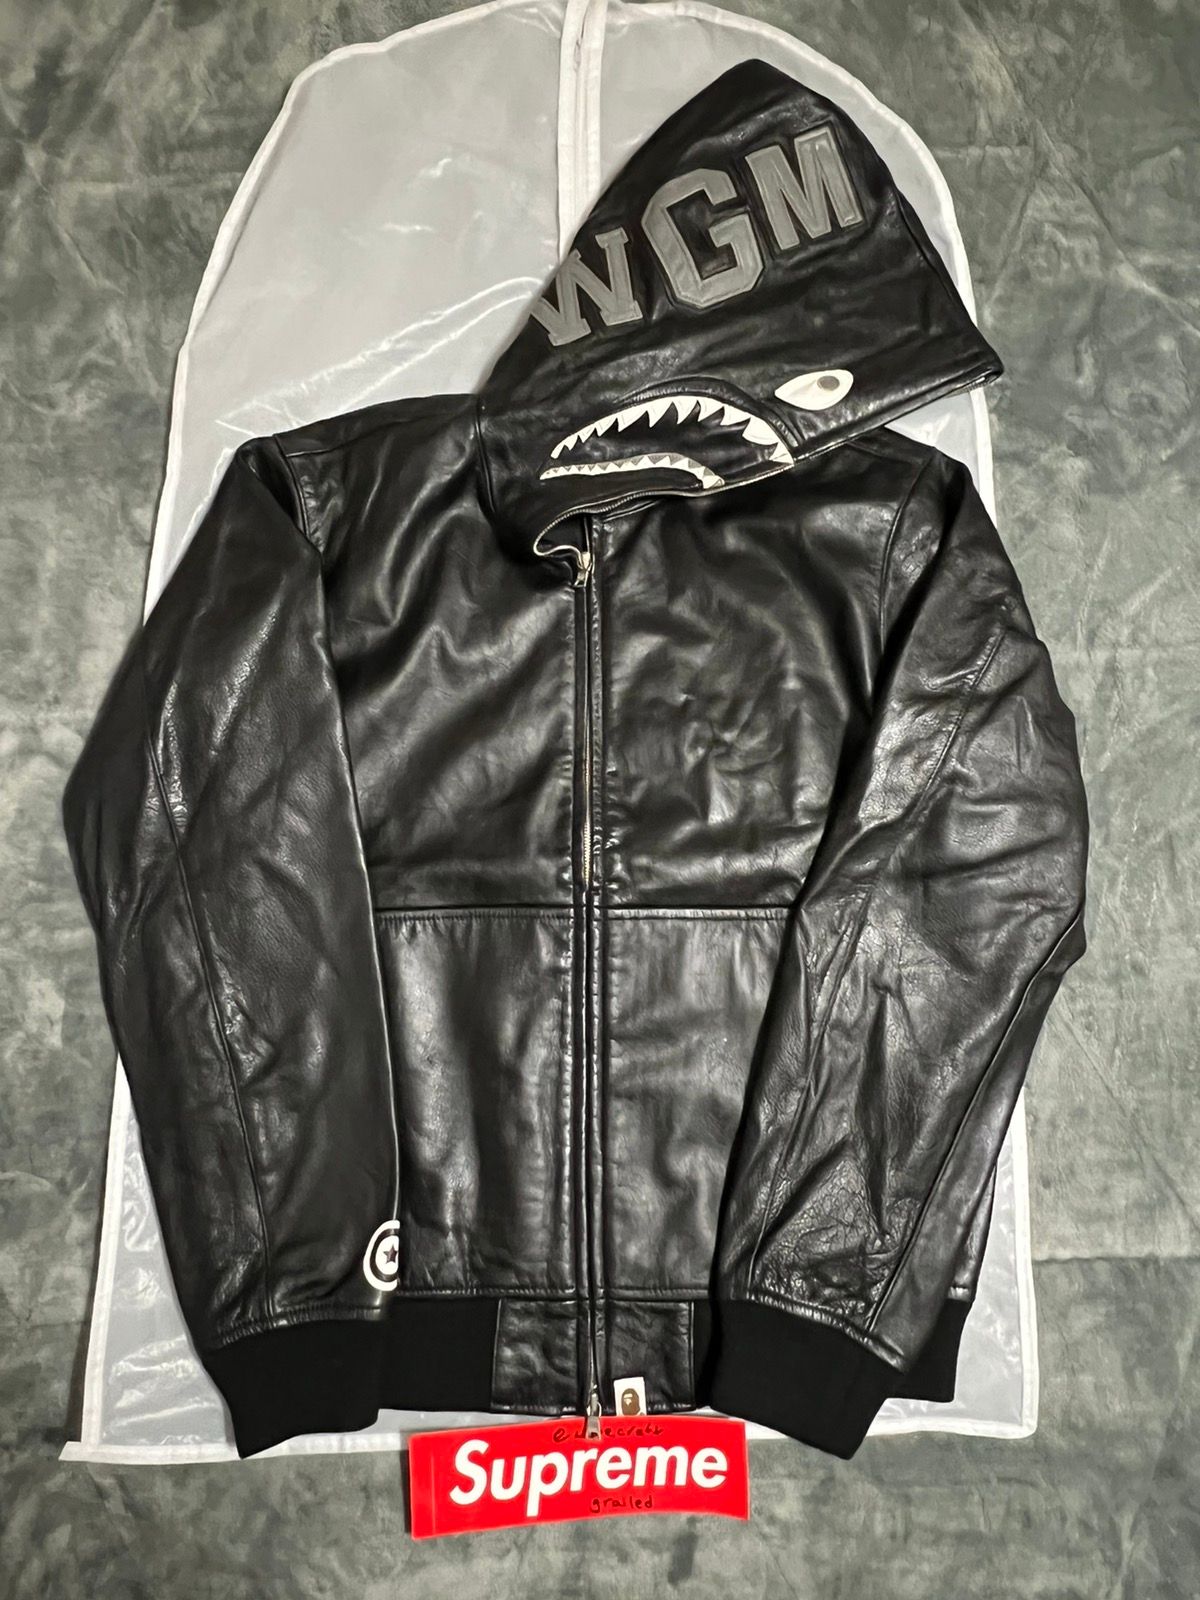 Bape SAMPLE Shark leather jacket | Grailed